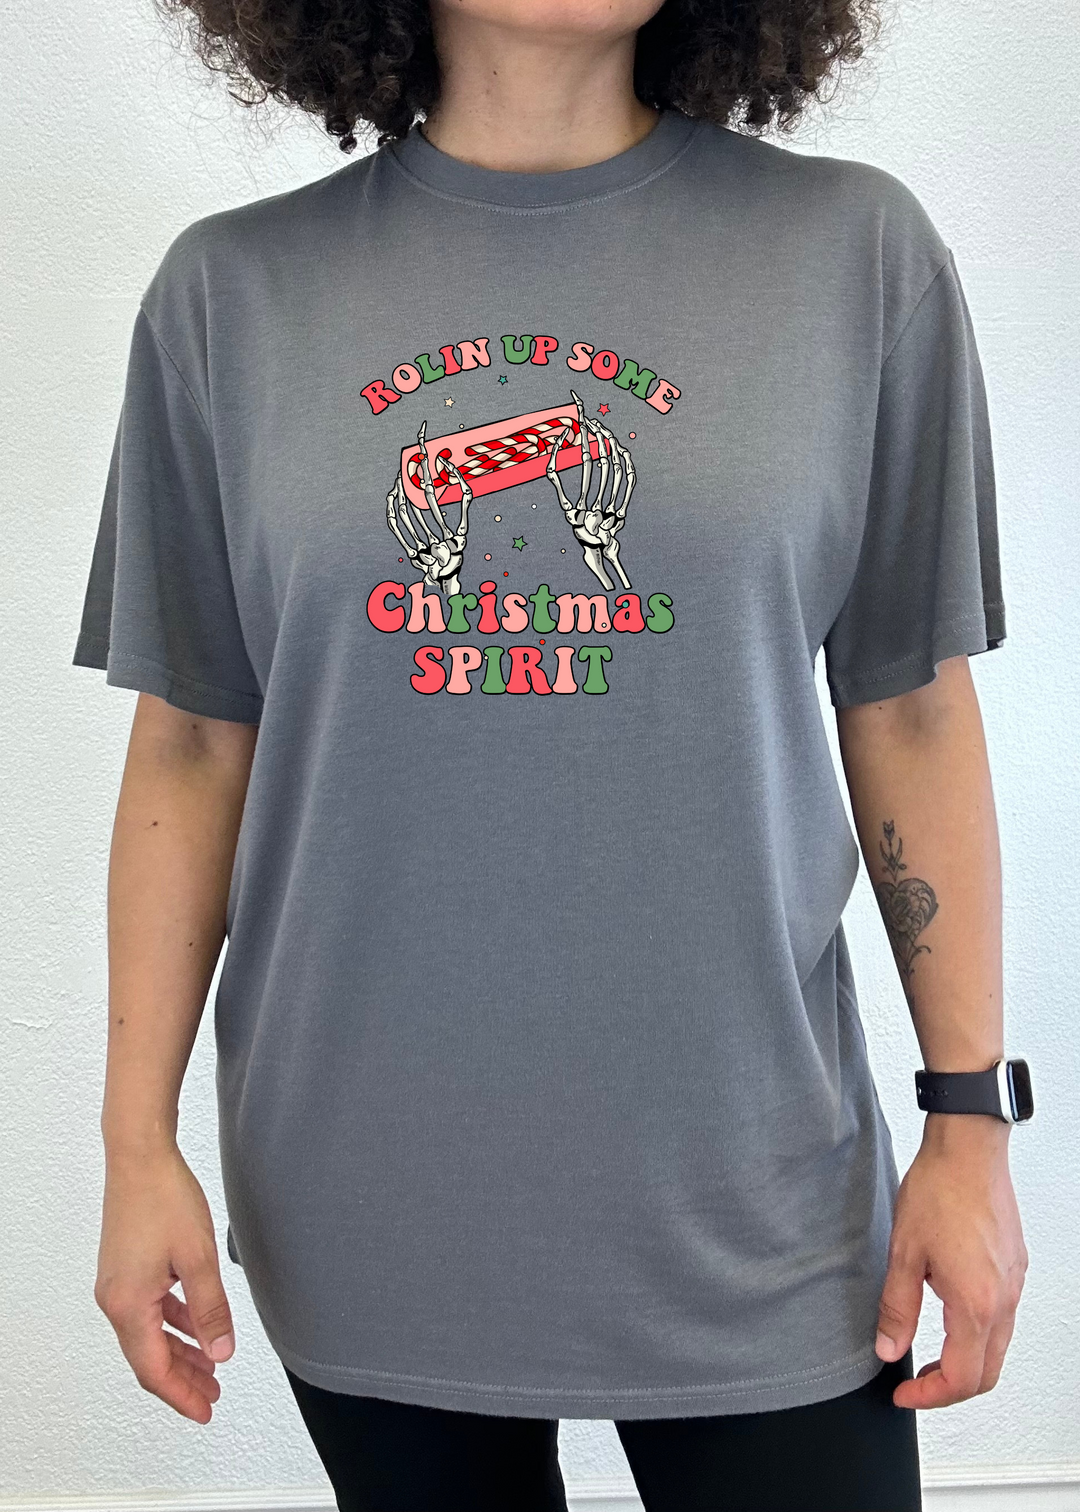 Rolin Up Some Christmas Spirit Unisex Bamboo Viscose/Organic Cotton Short Sleeve Graphic T-Shirt